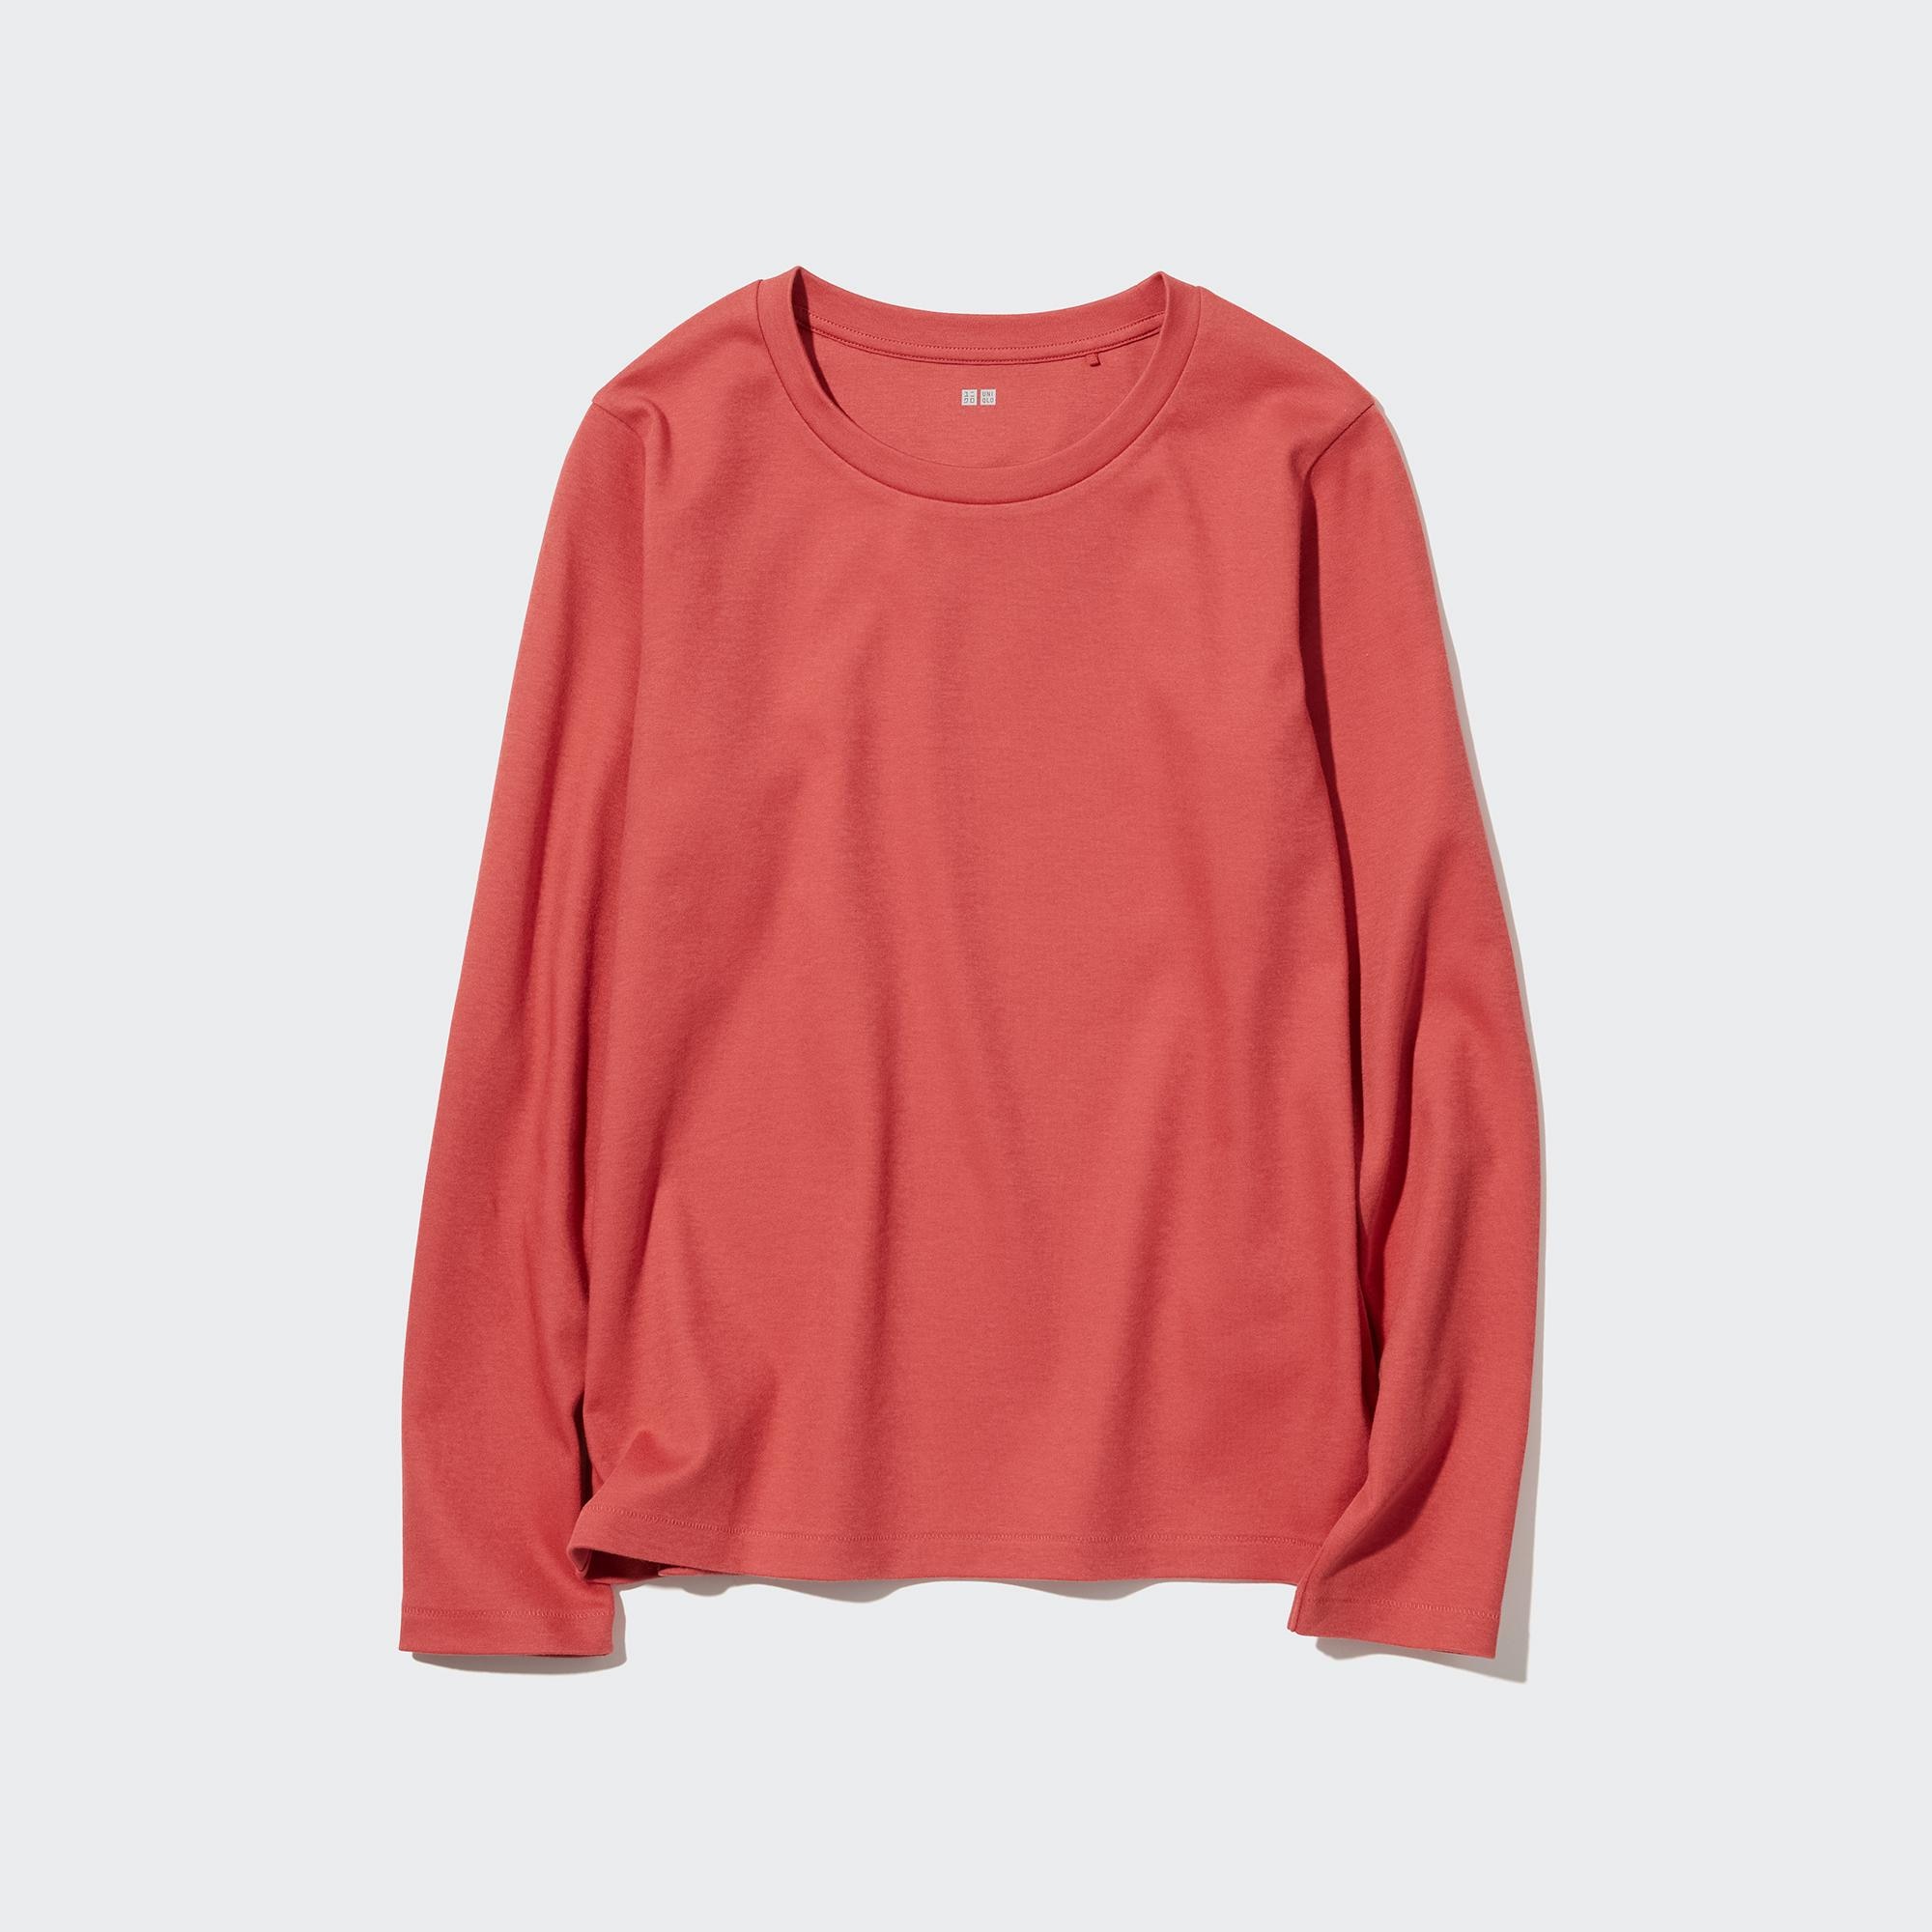 Ralph Lauren Denim Supply Womens Small Red Thermal Stretch Long Sleeve Shirt